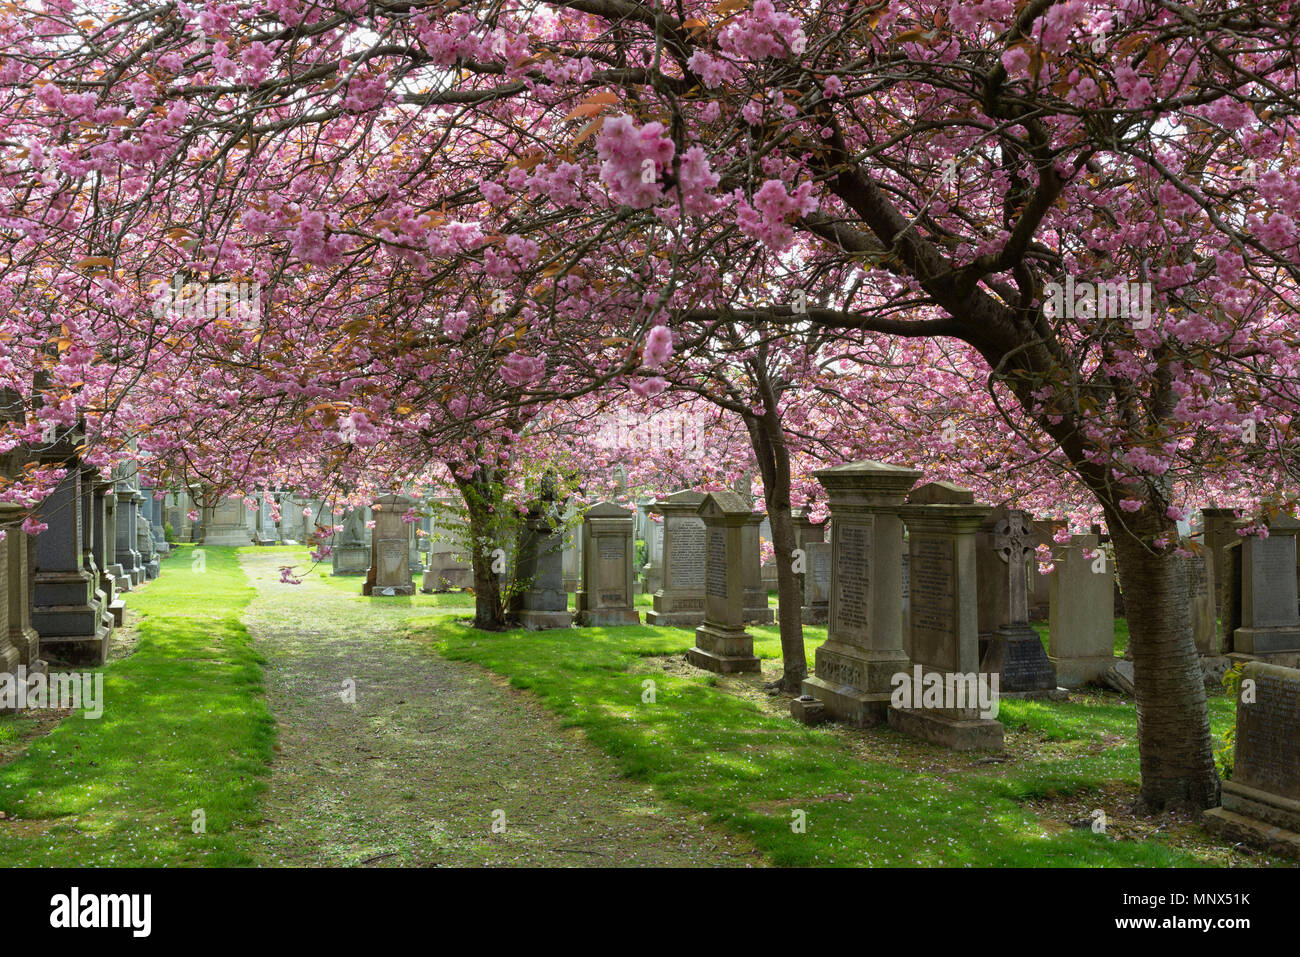 An Abundance of Cherry Blossom Brightens Allenvale Cemetery in Aberdeen, Scotland. Stock Photo